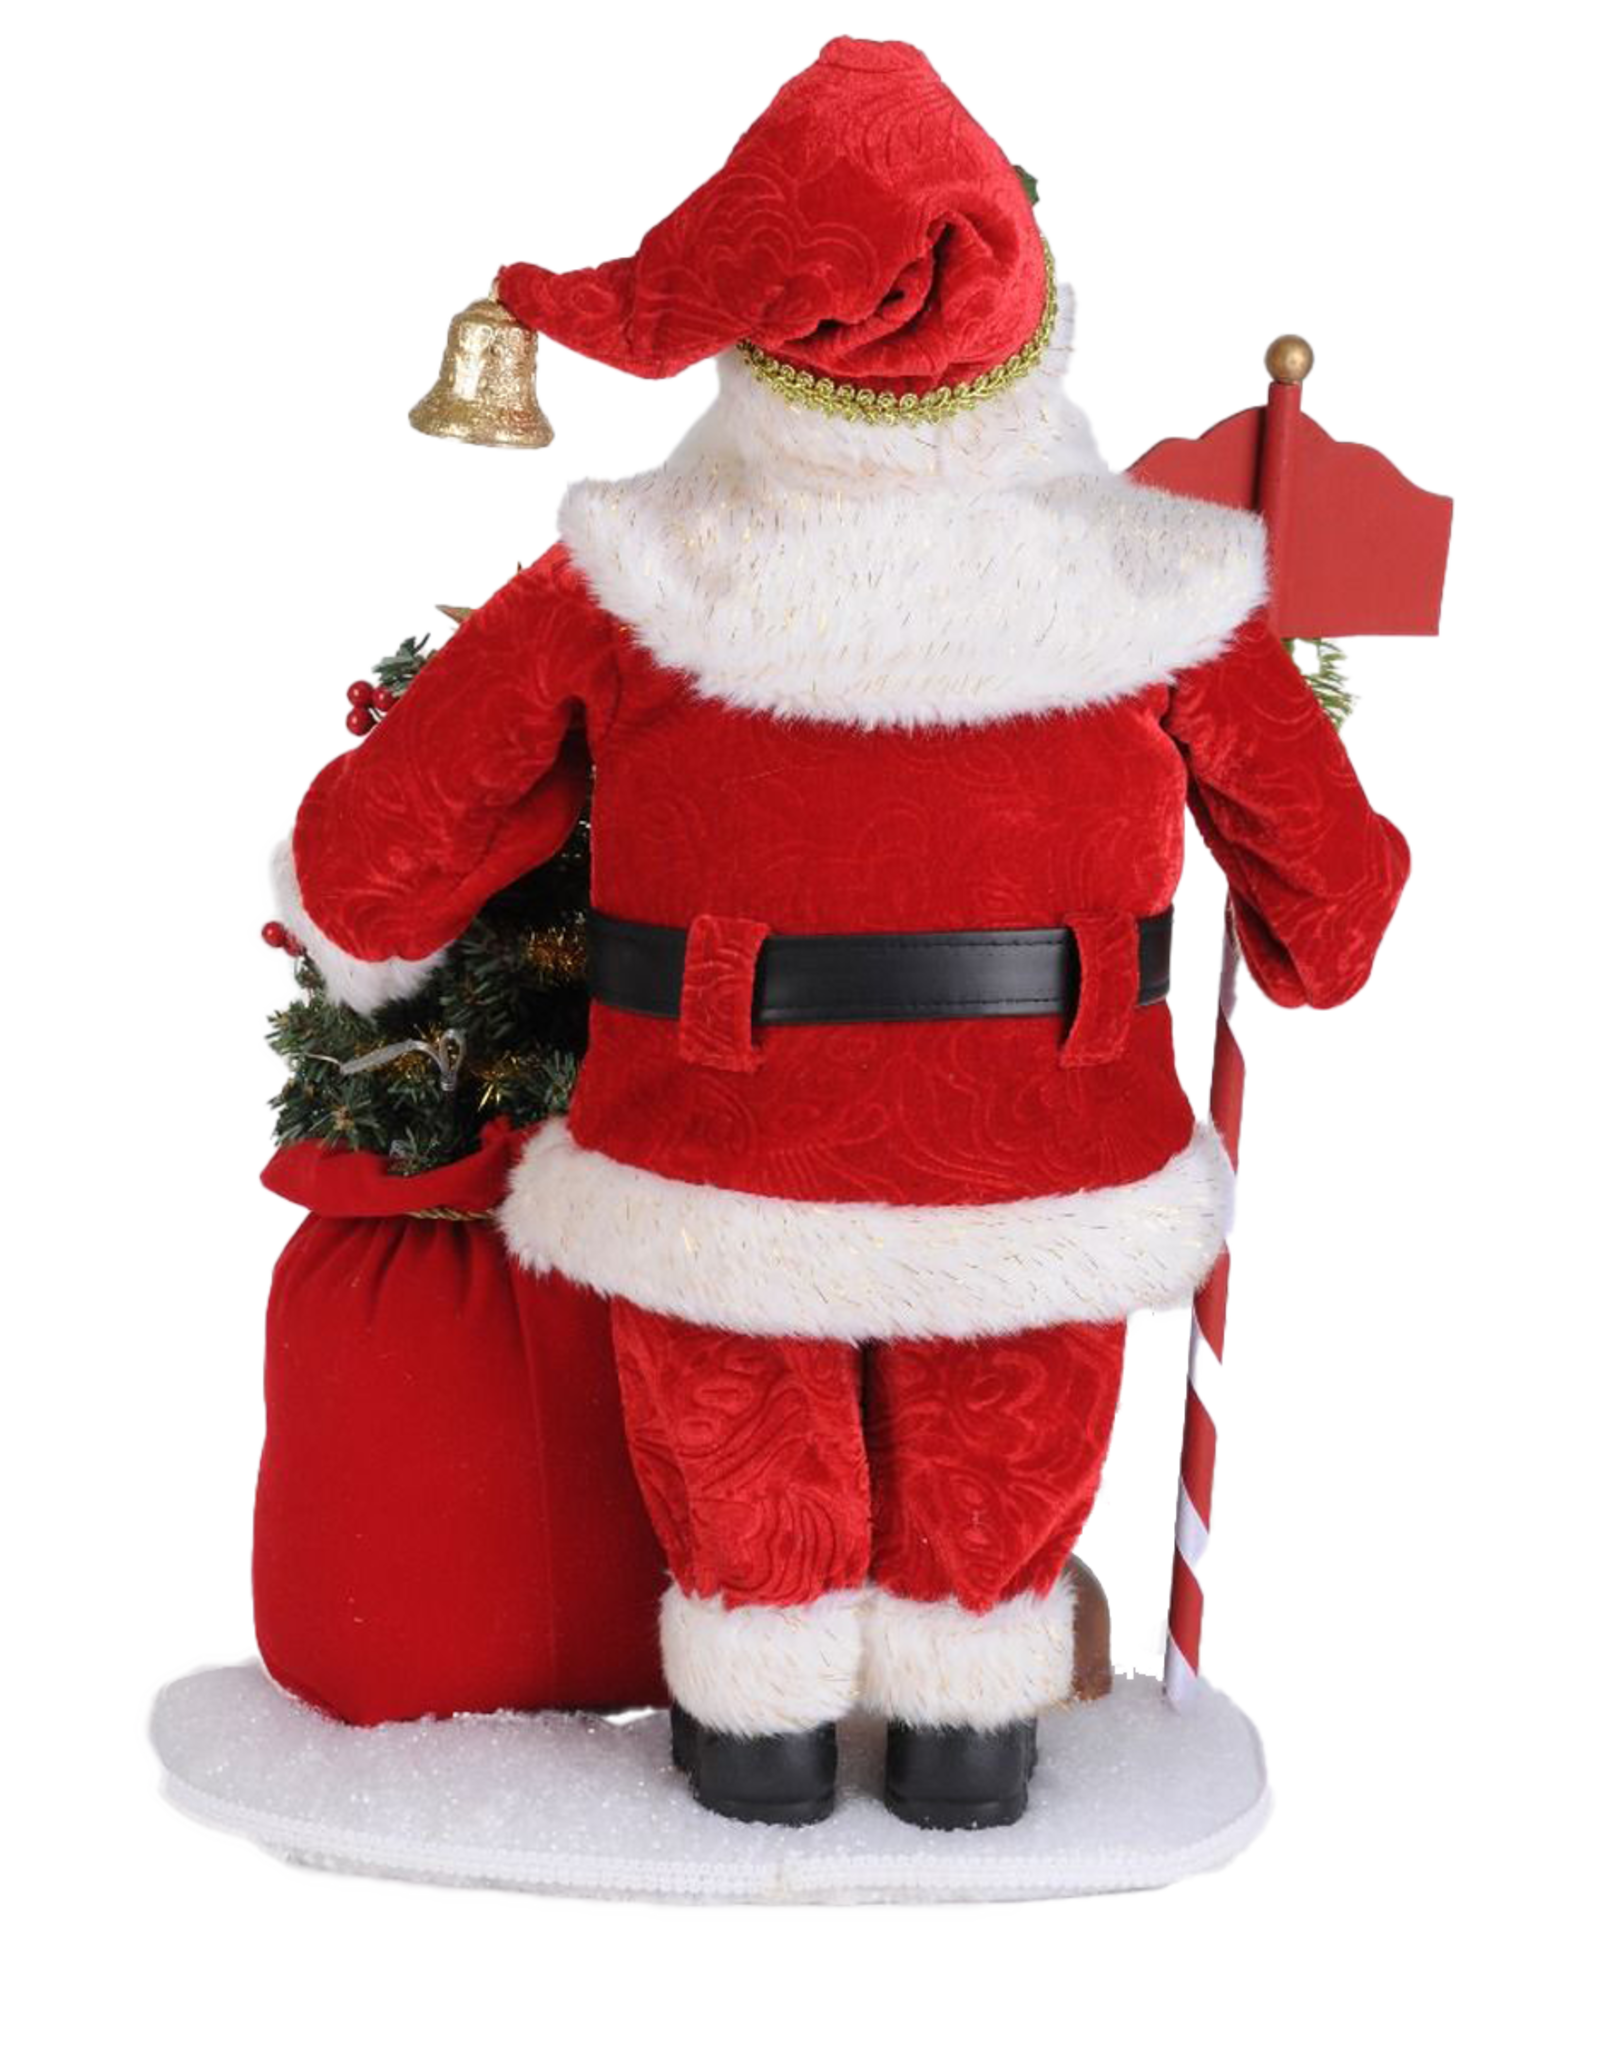 Karen Didion Lighted North Pole Magic Santa Scene 13x9x20H Inches